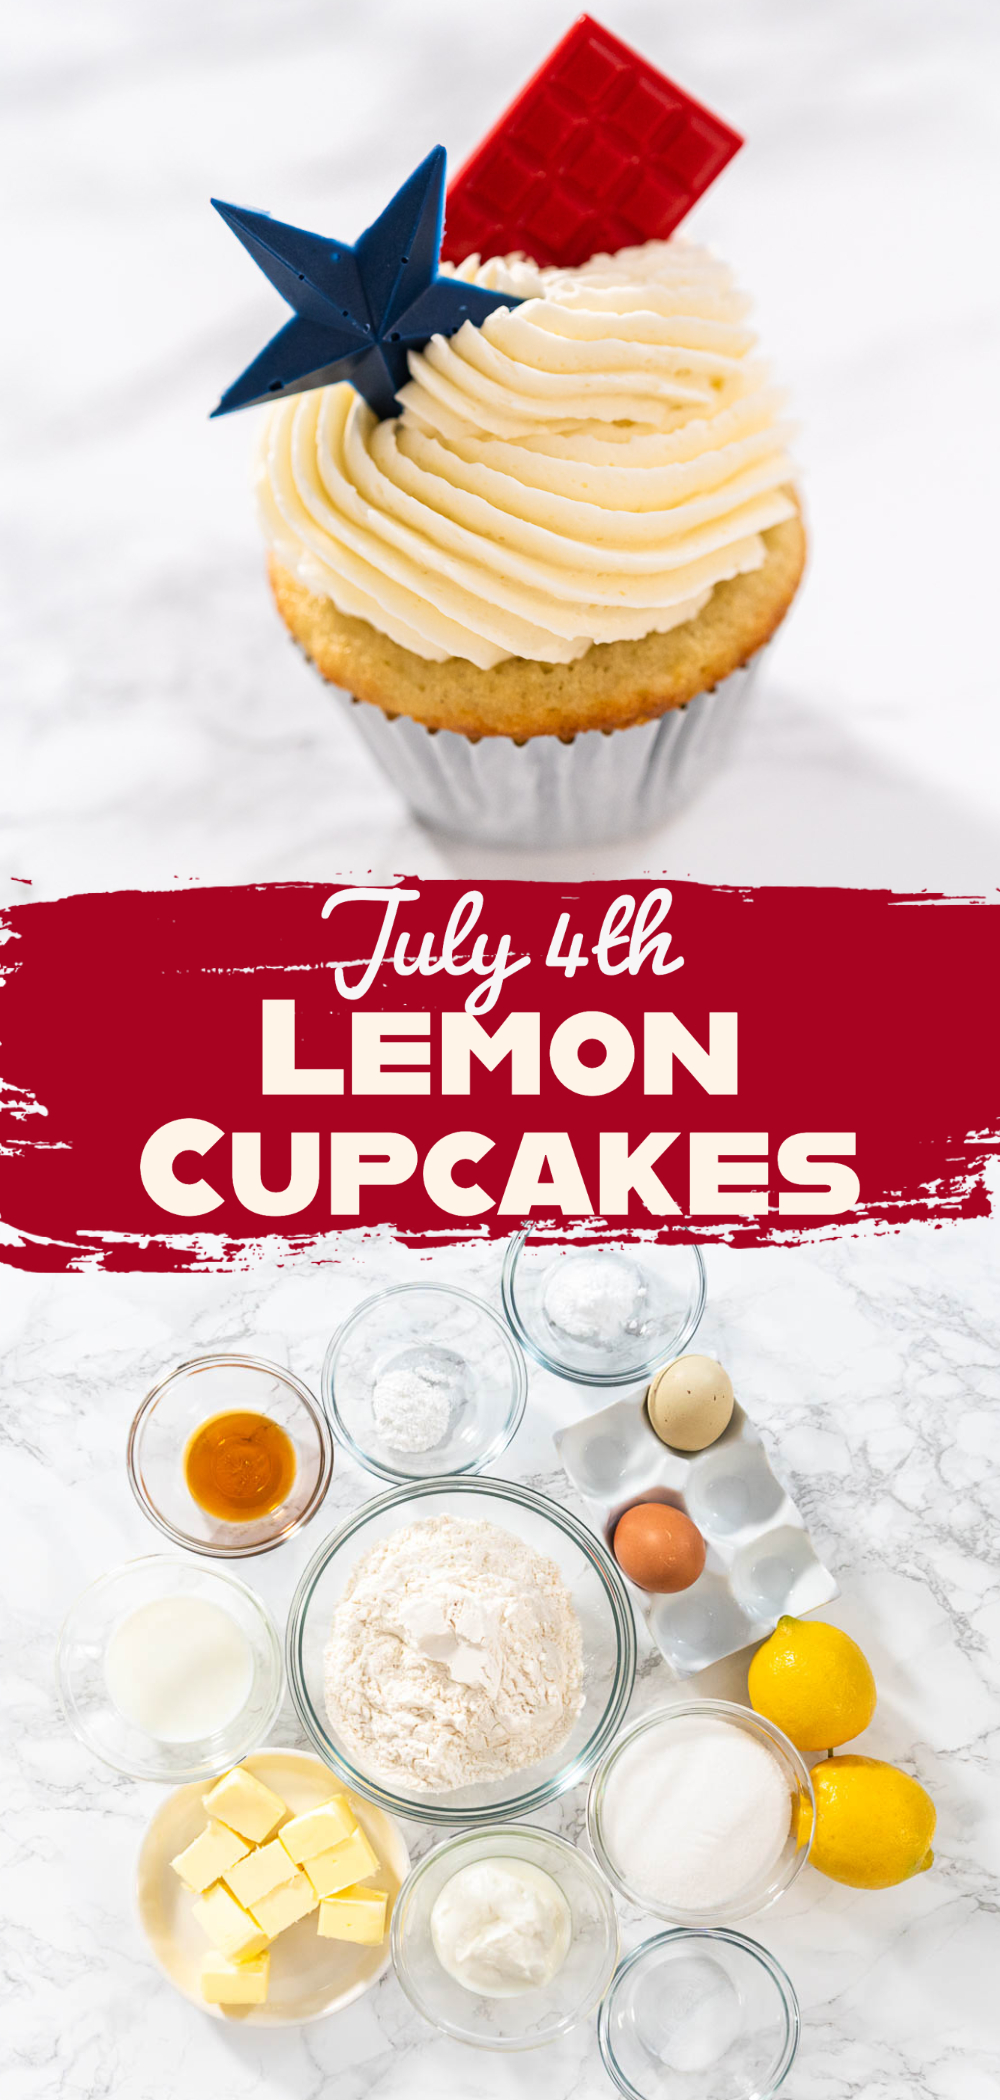 July 4th Lemon Cupcakes